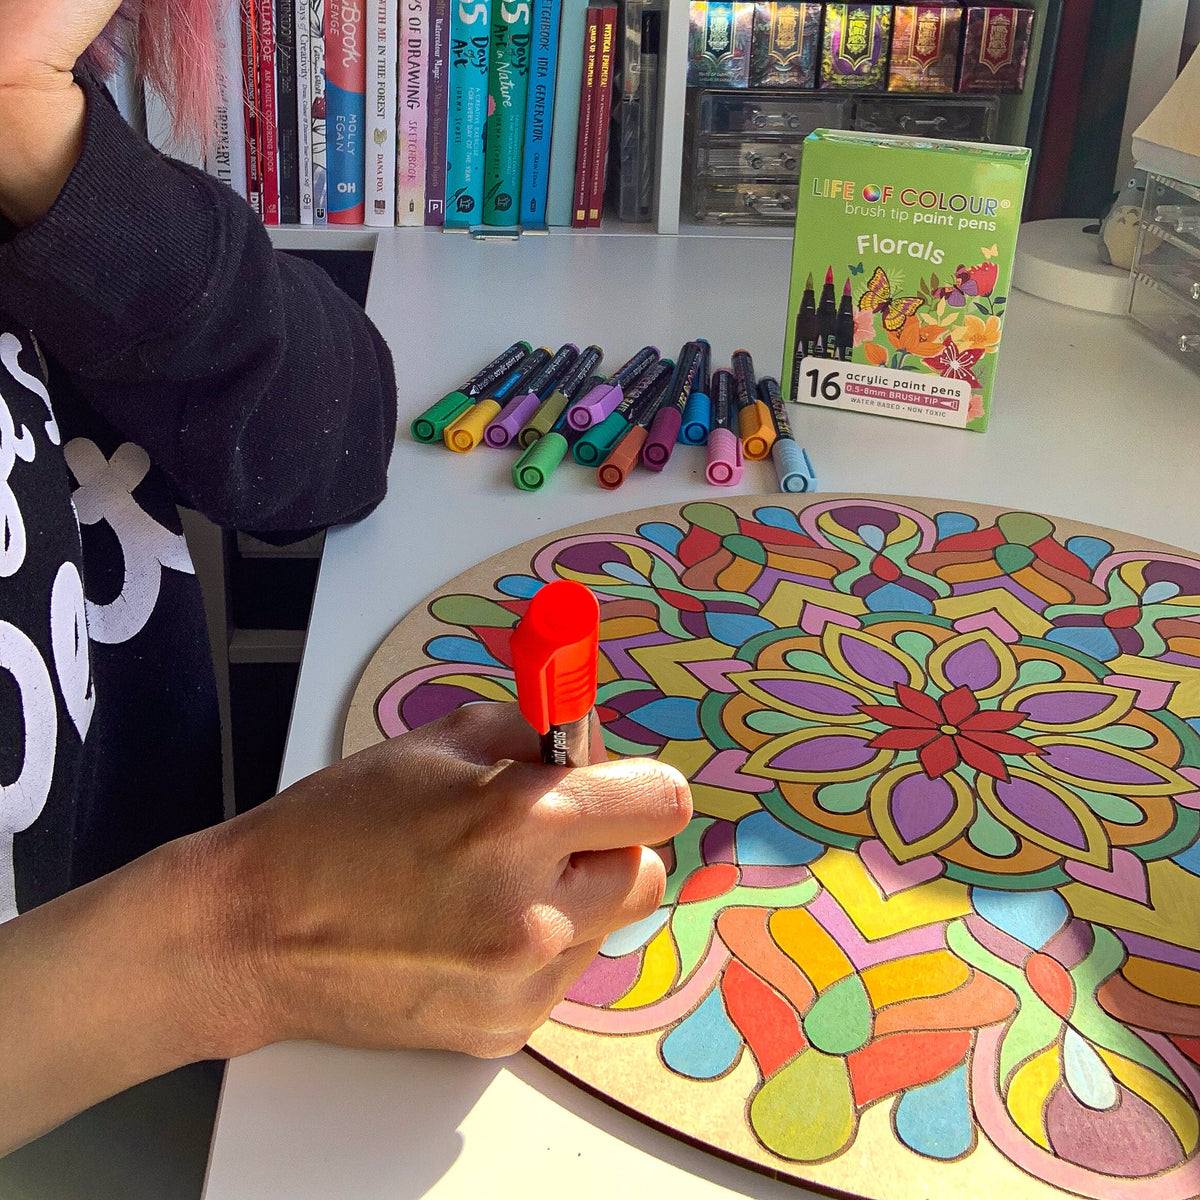 Life of Colour Mandala Painting Kit - The Dancer (Metallics)